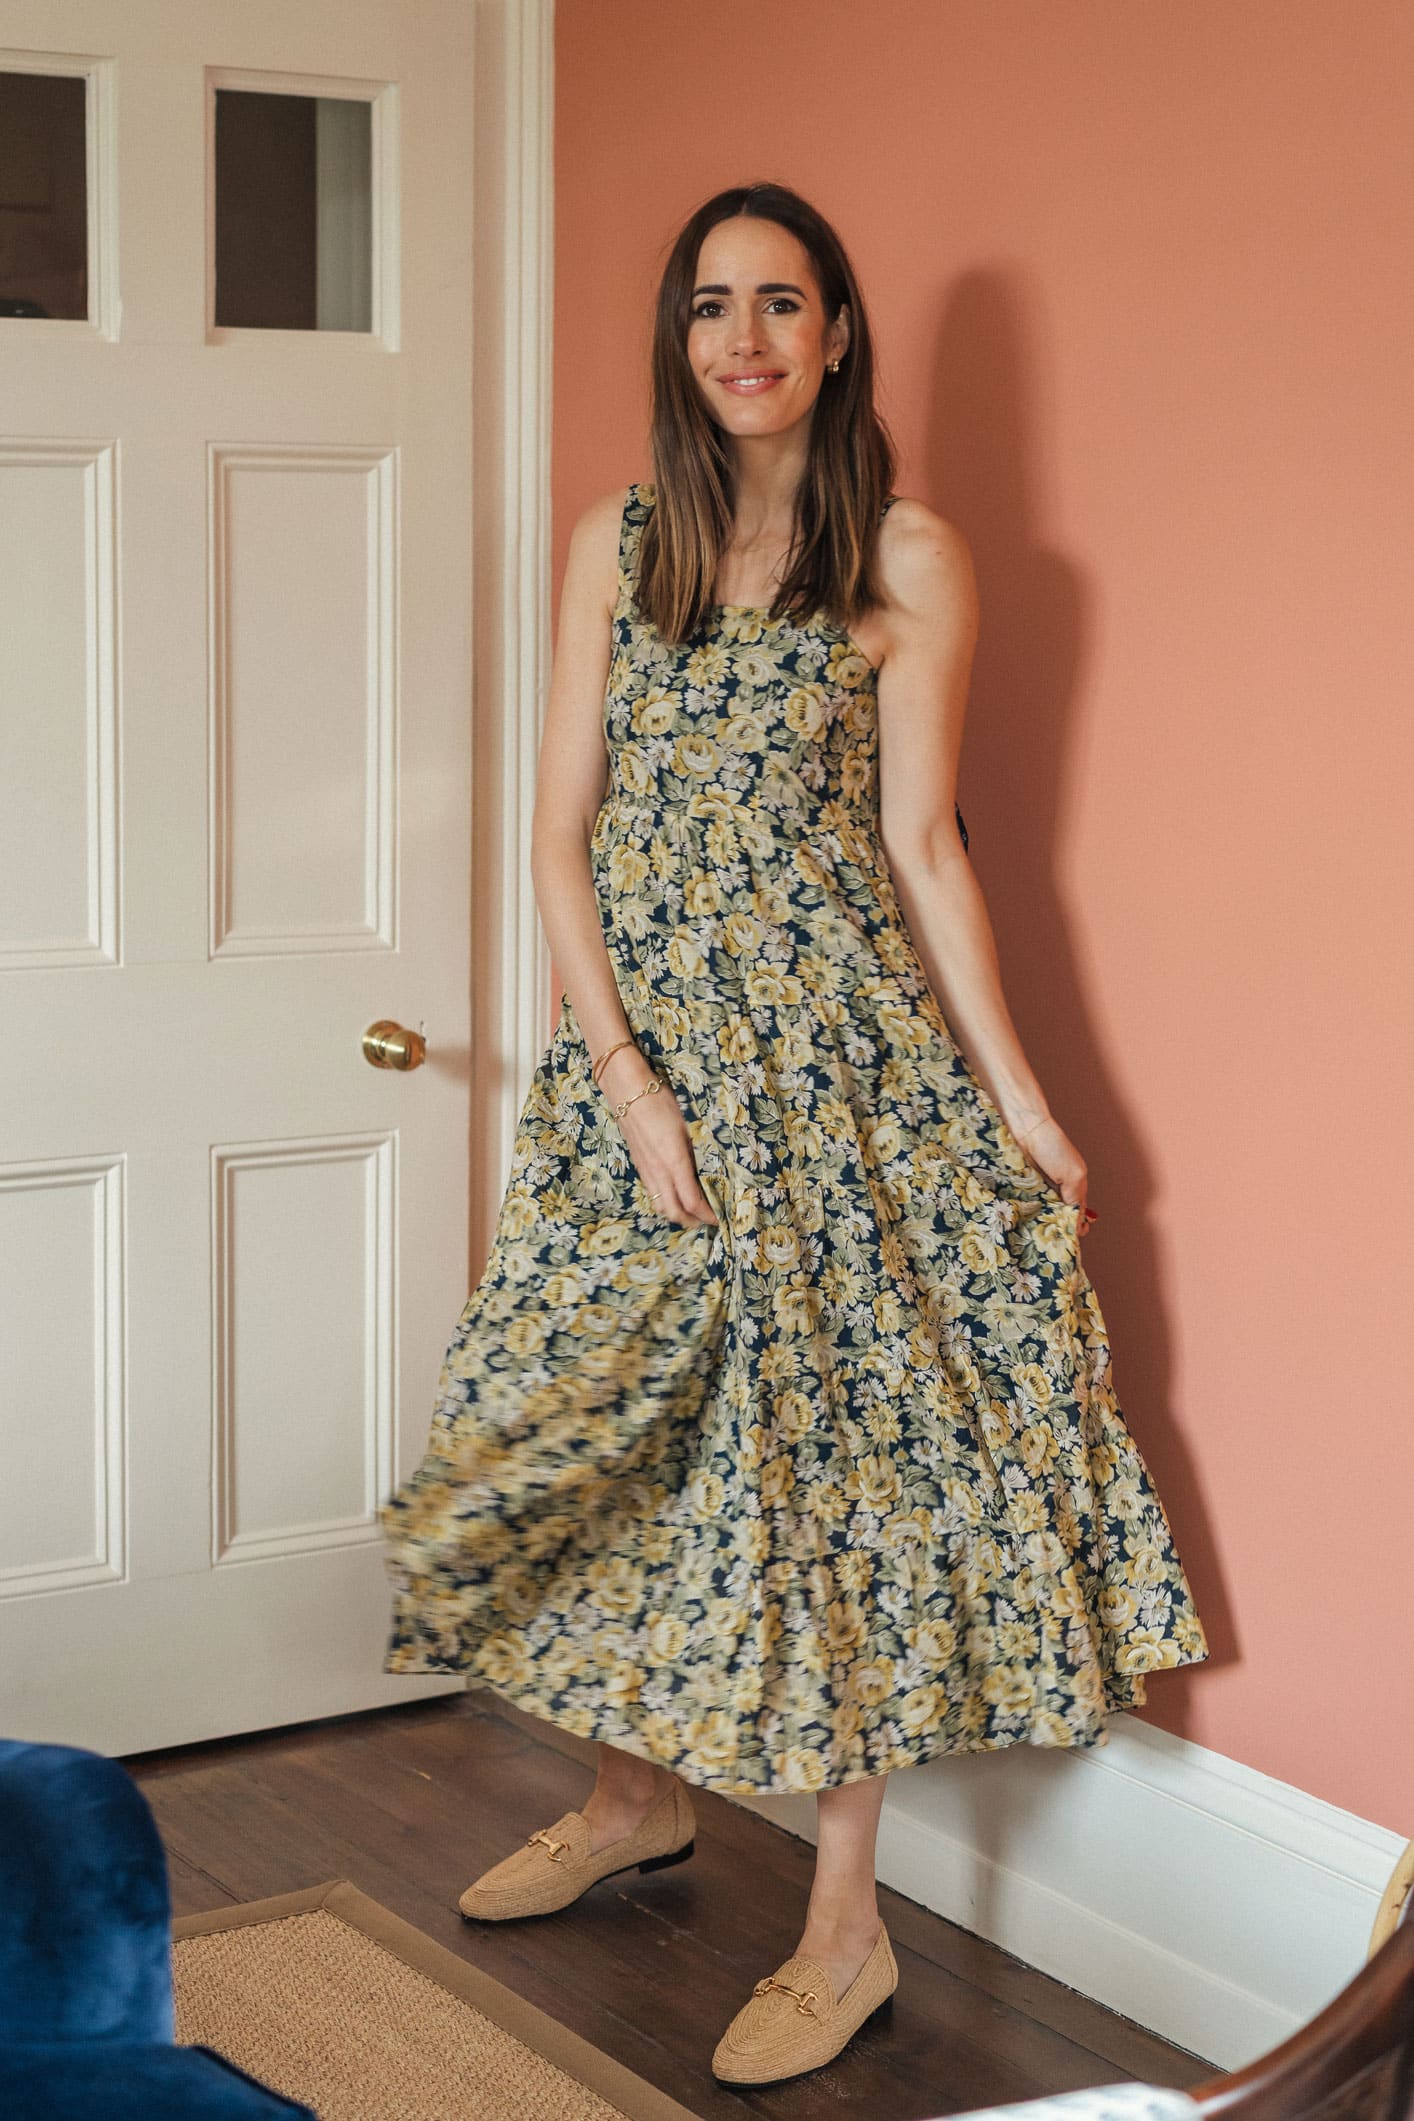 My Uniform: The Floaty Floral Maxi Dress